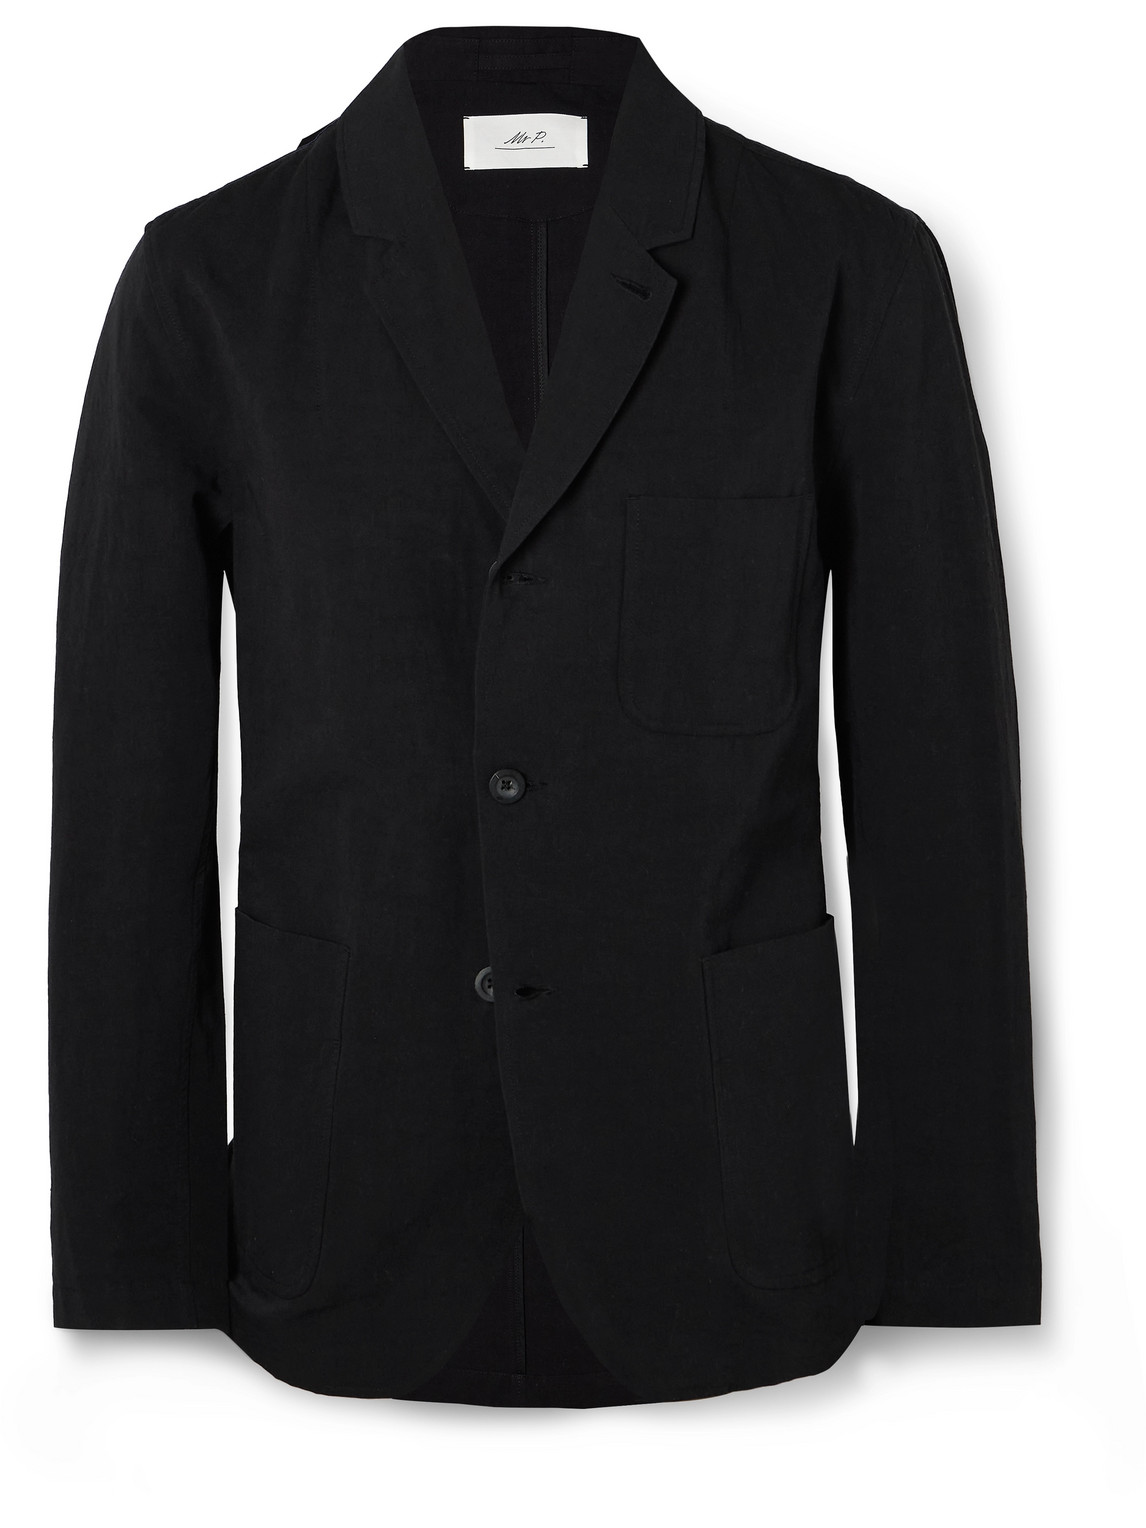 Mr P Linen, Cotton And Nylon-blend Blazer In Black